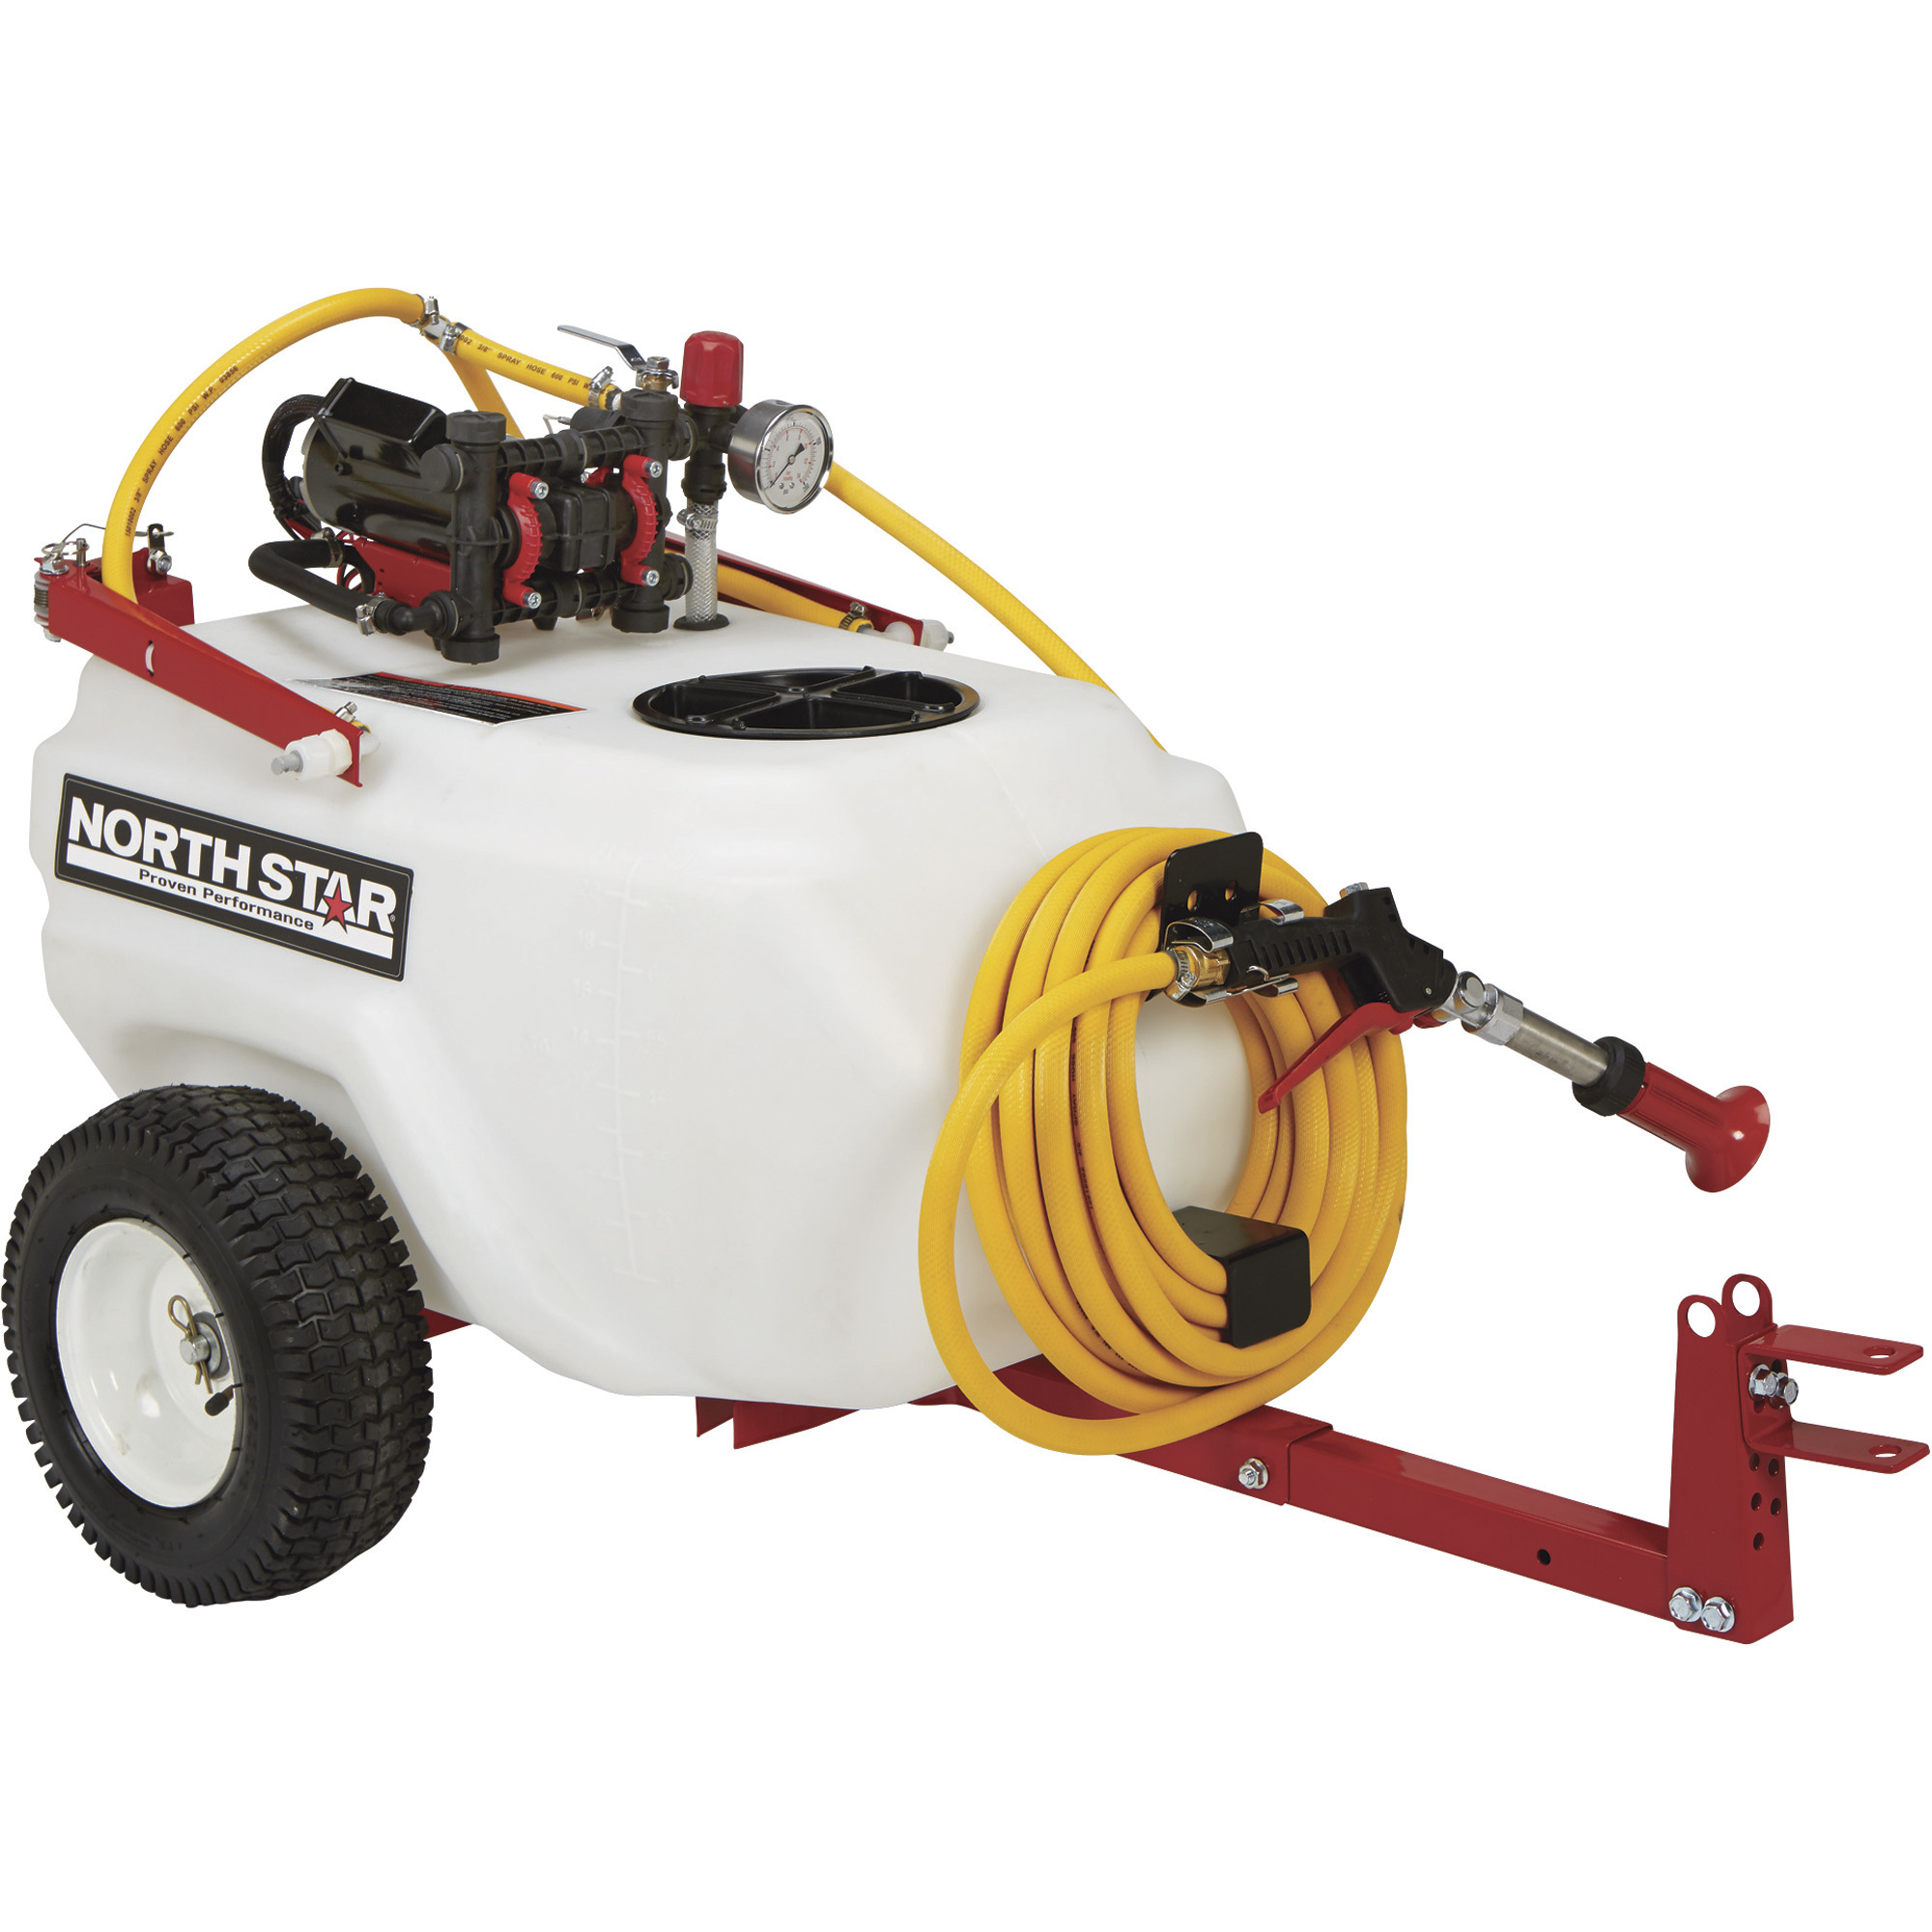 NorthStar ATV High-Pressure Tree/Orchard Sprayer â 21-Gallon, 2 GPM, 12 Volt, Model 282805